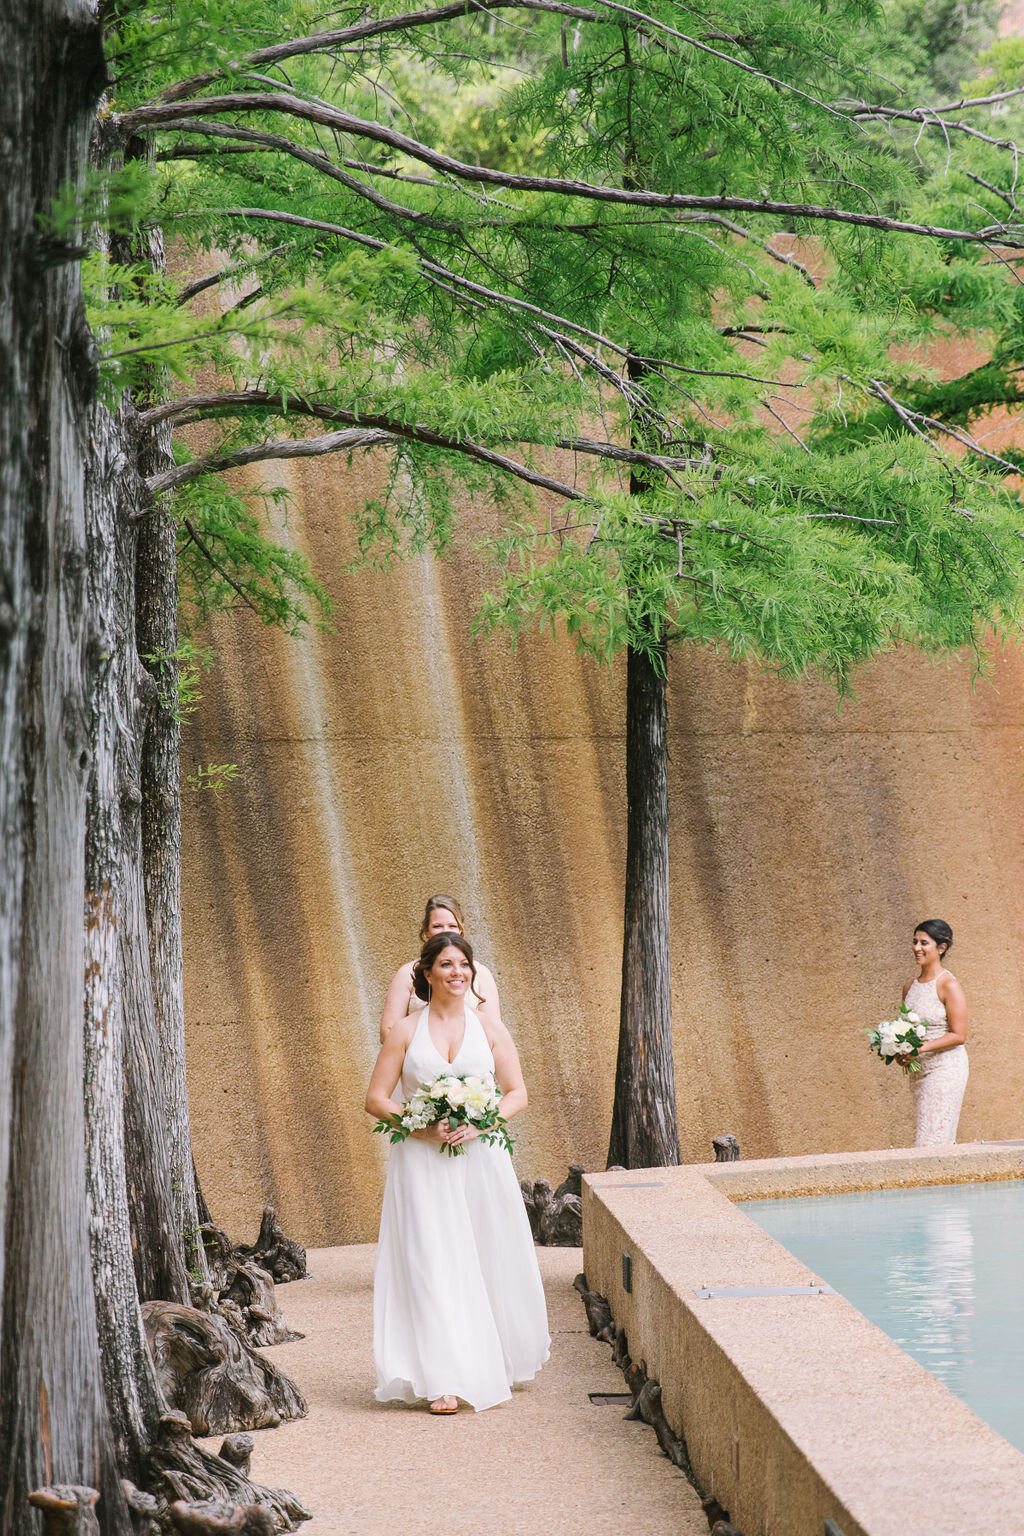 Ellen-Ashton-Photography-Dallas-Wedding-Photographers-Girt-and-gold-events-weddings46.jpg